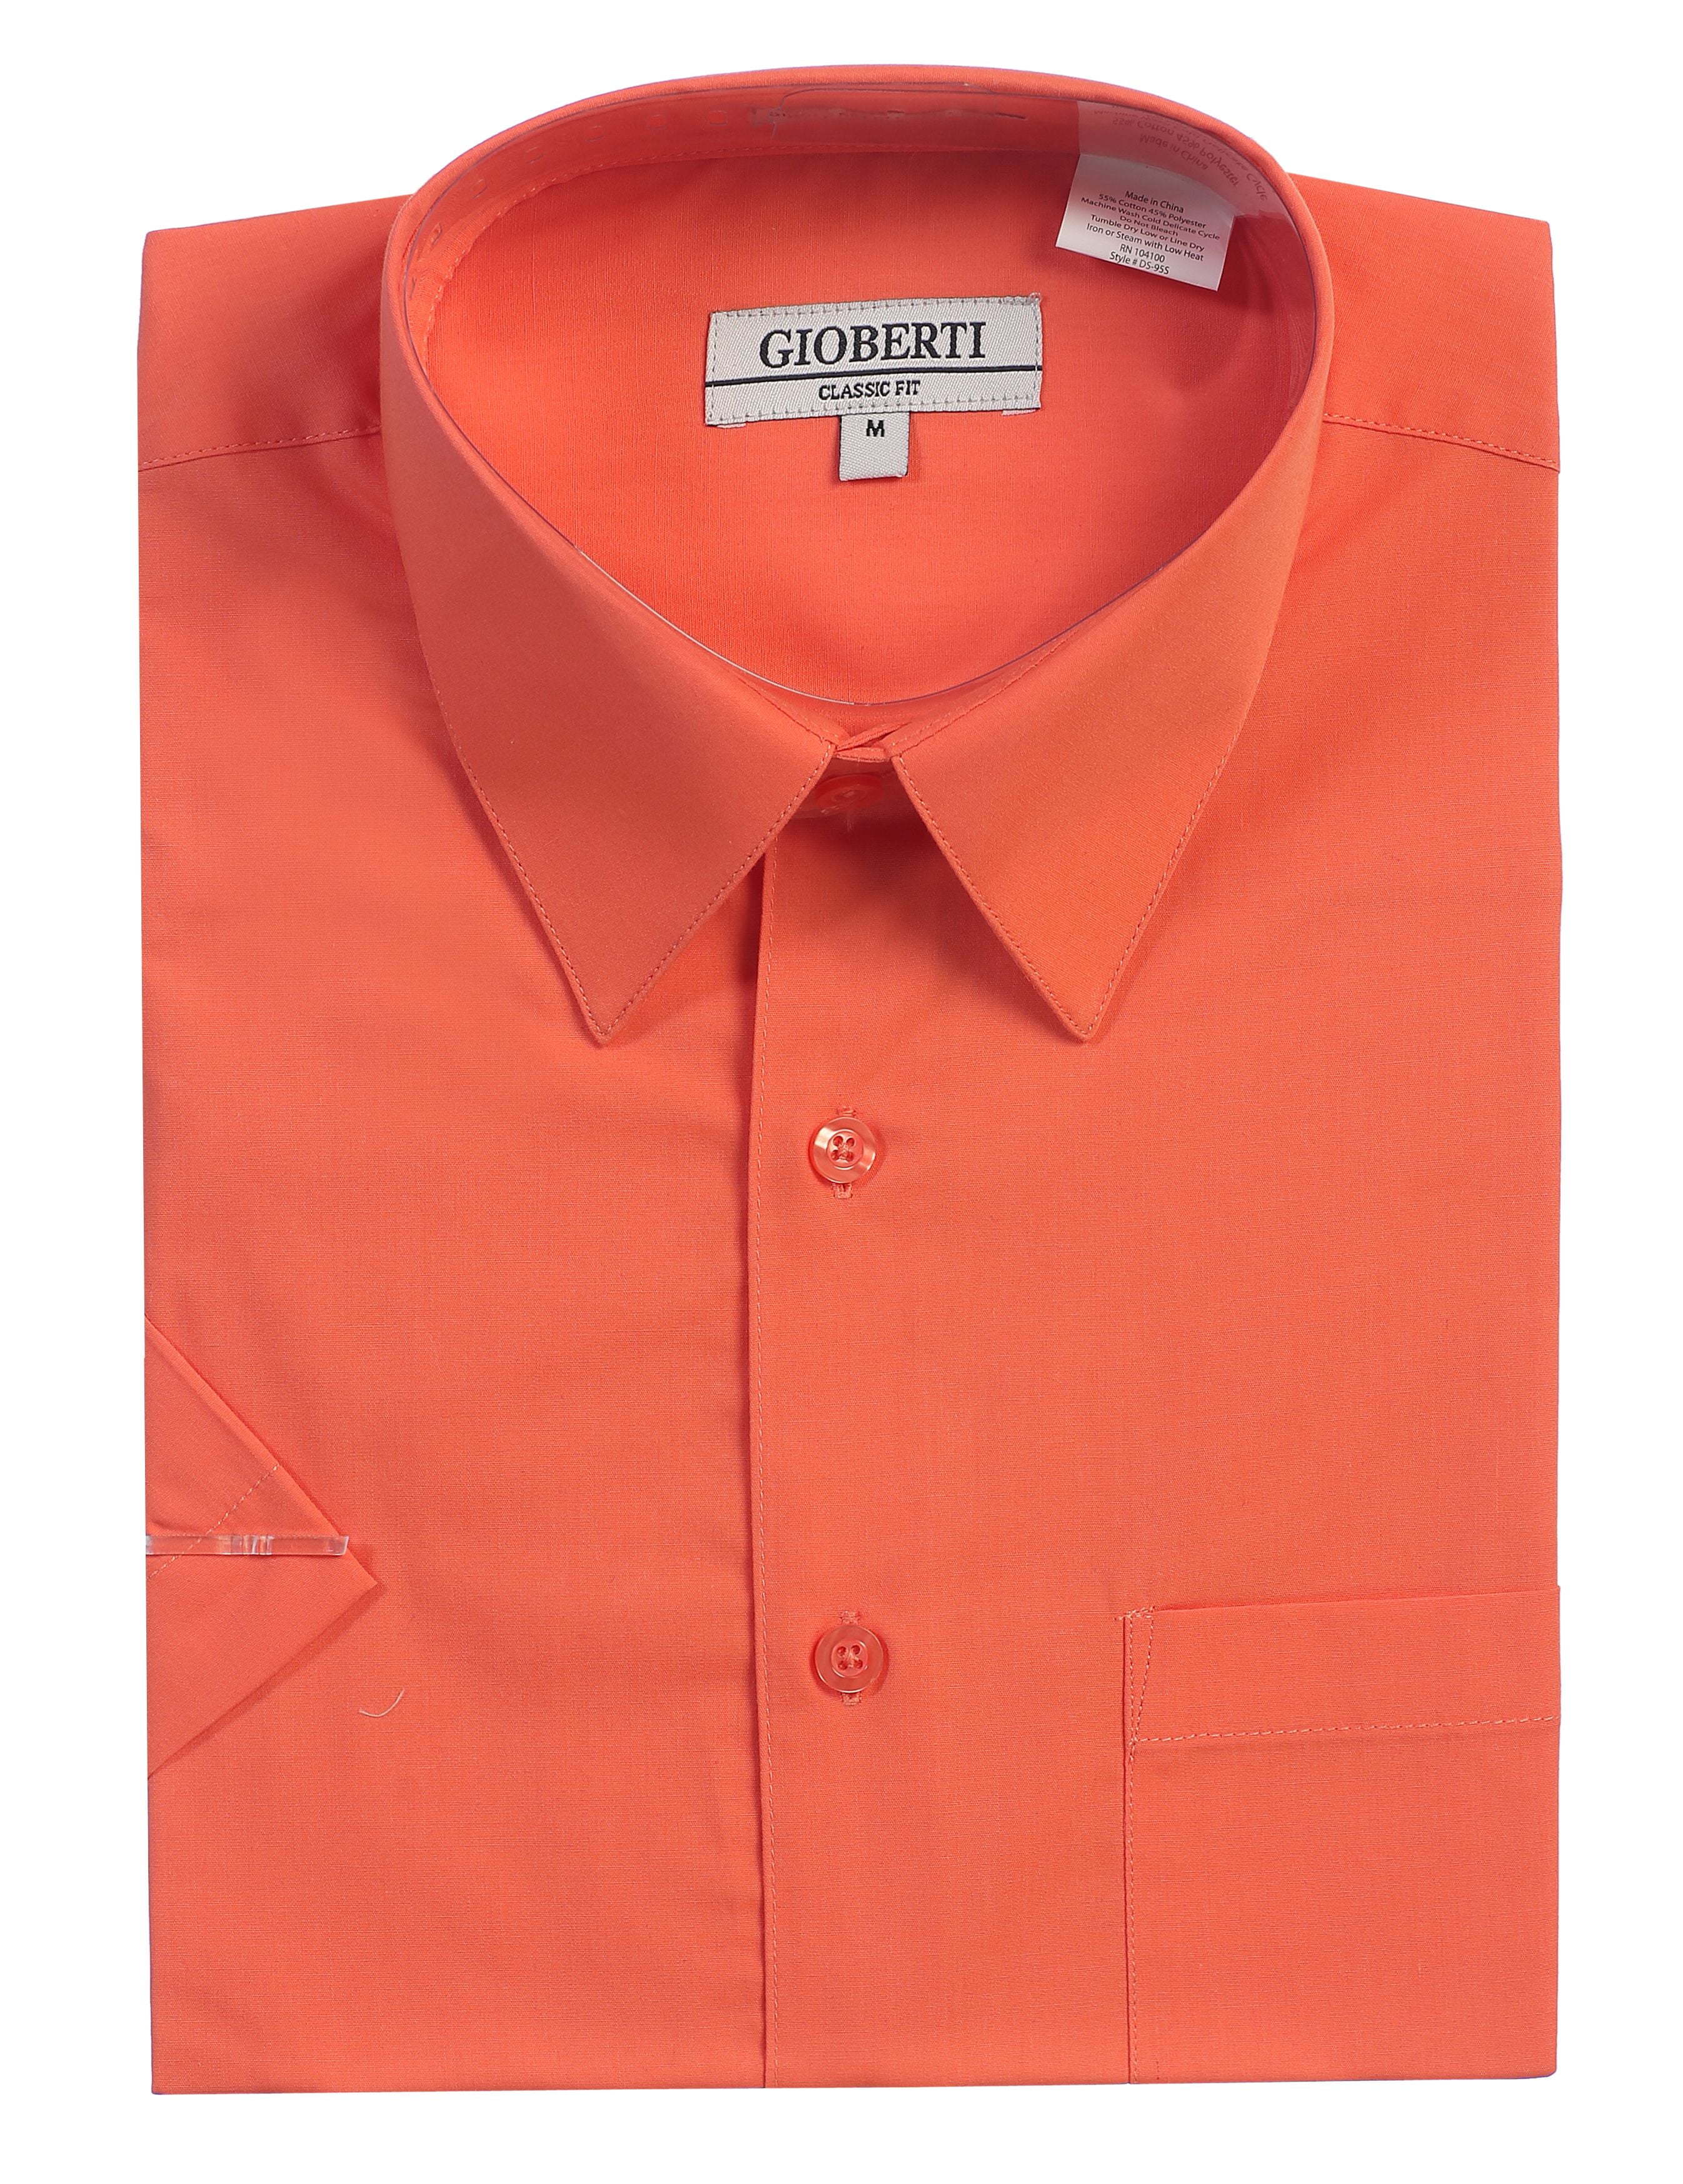 Gioberti - Gioberti Men's Short Sleeve Solid Dress Shirt - Walmart.com